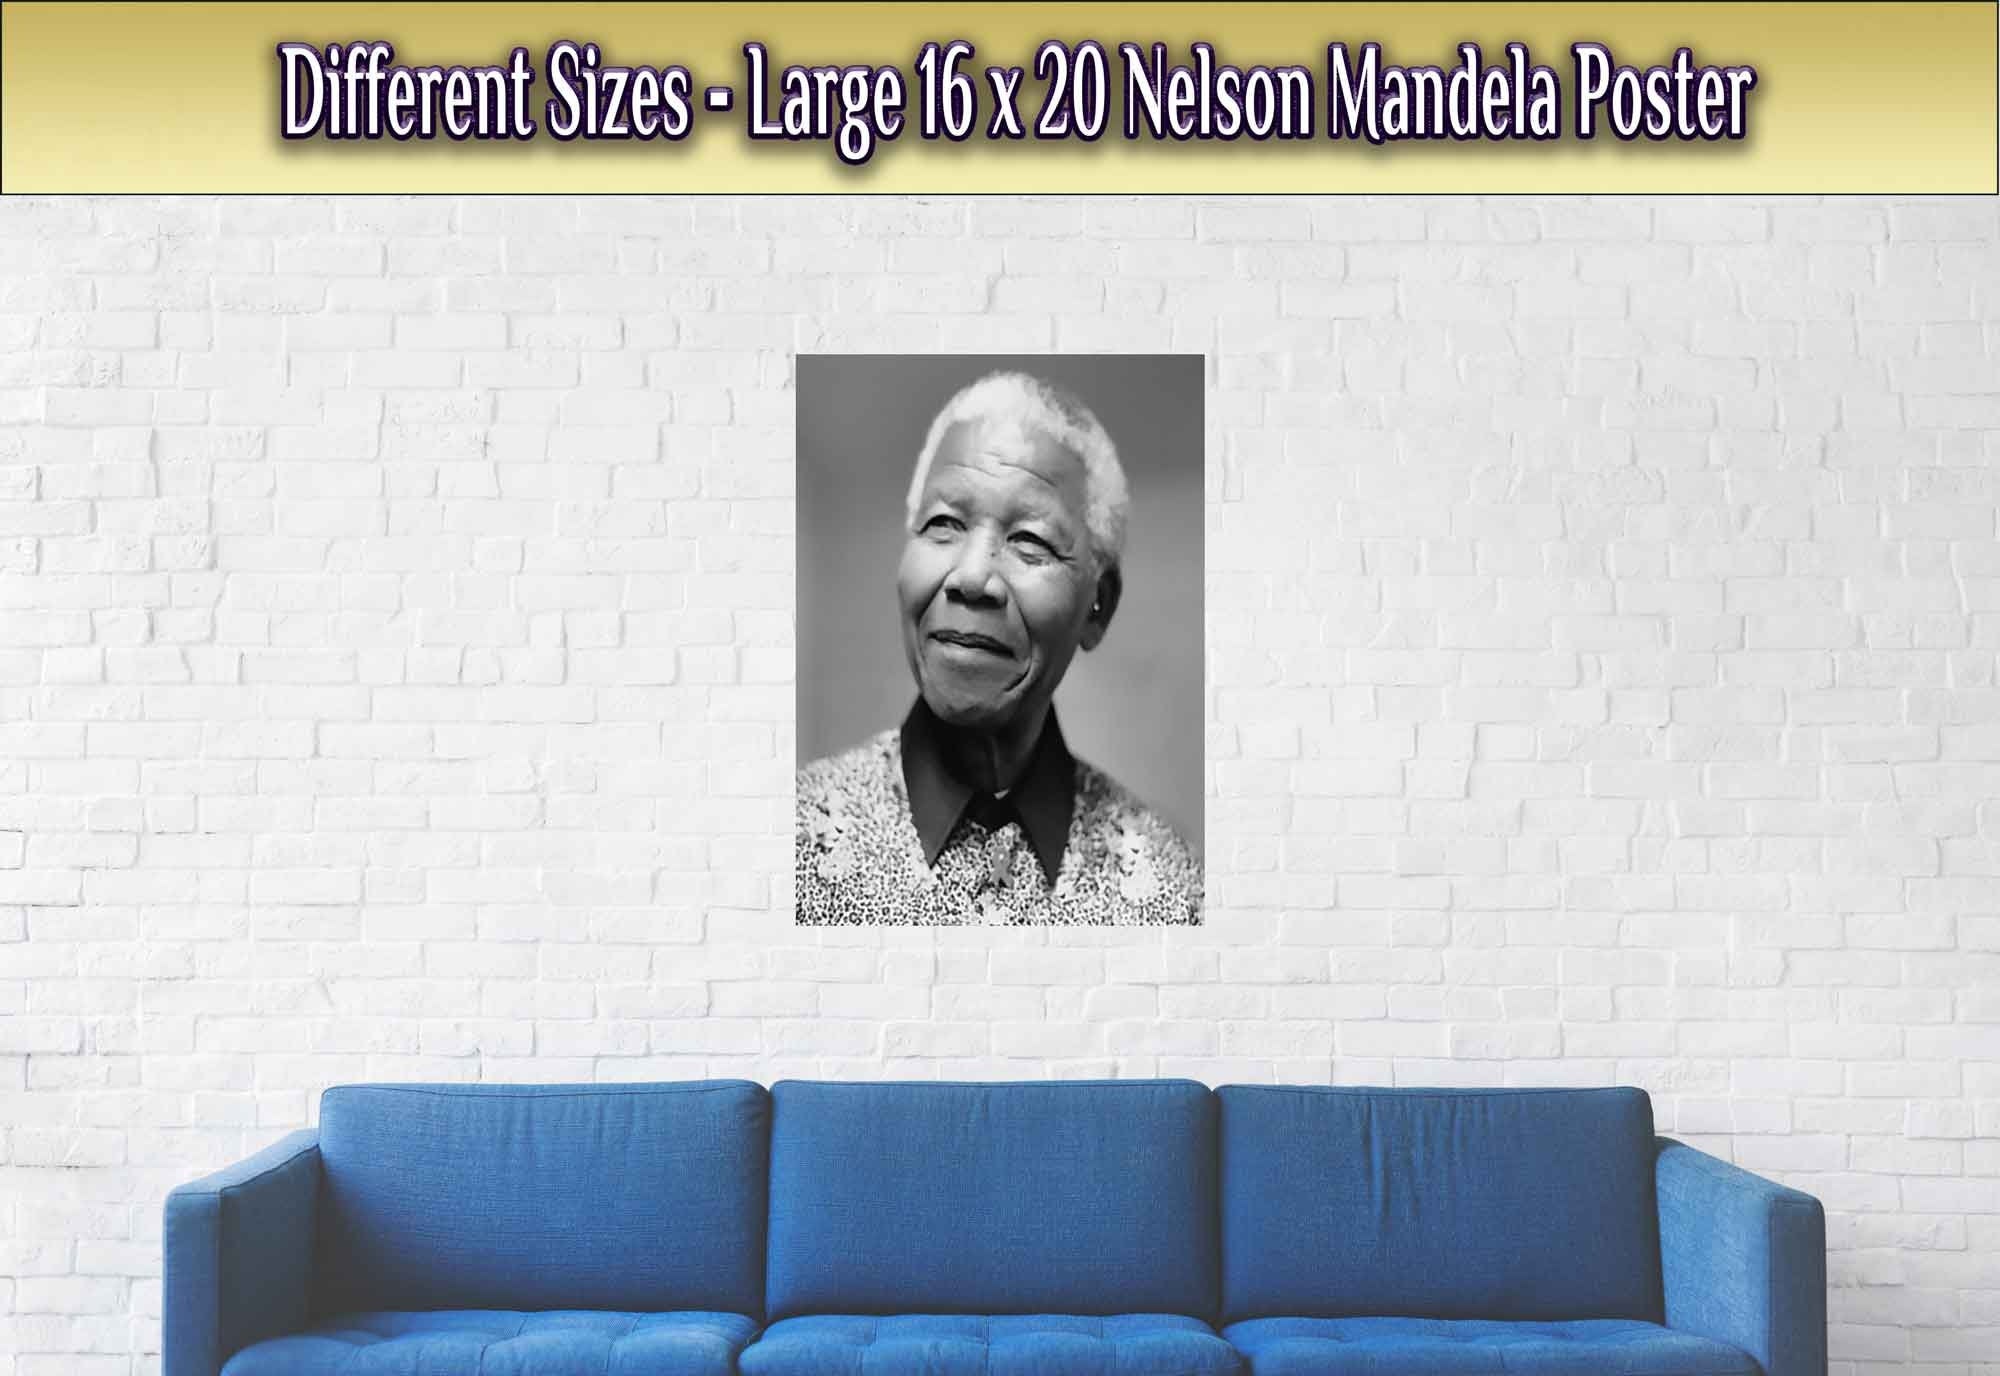 Nelson Mandela Poster, Lifelong Apatheid Opponent, Vintage Photo - Iconic Nelson Mandela Print - Anc Leader - WallArtPrints4U